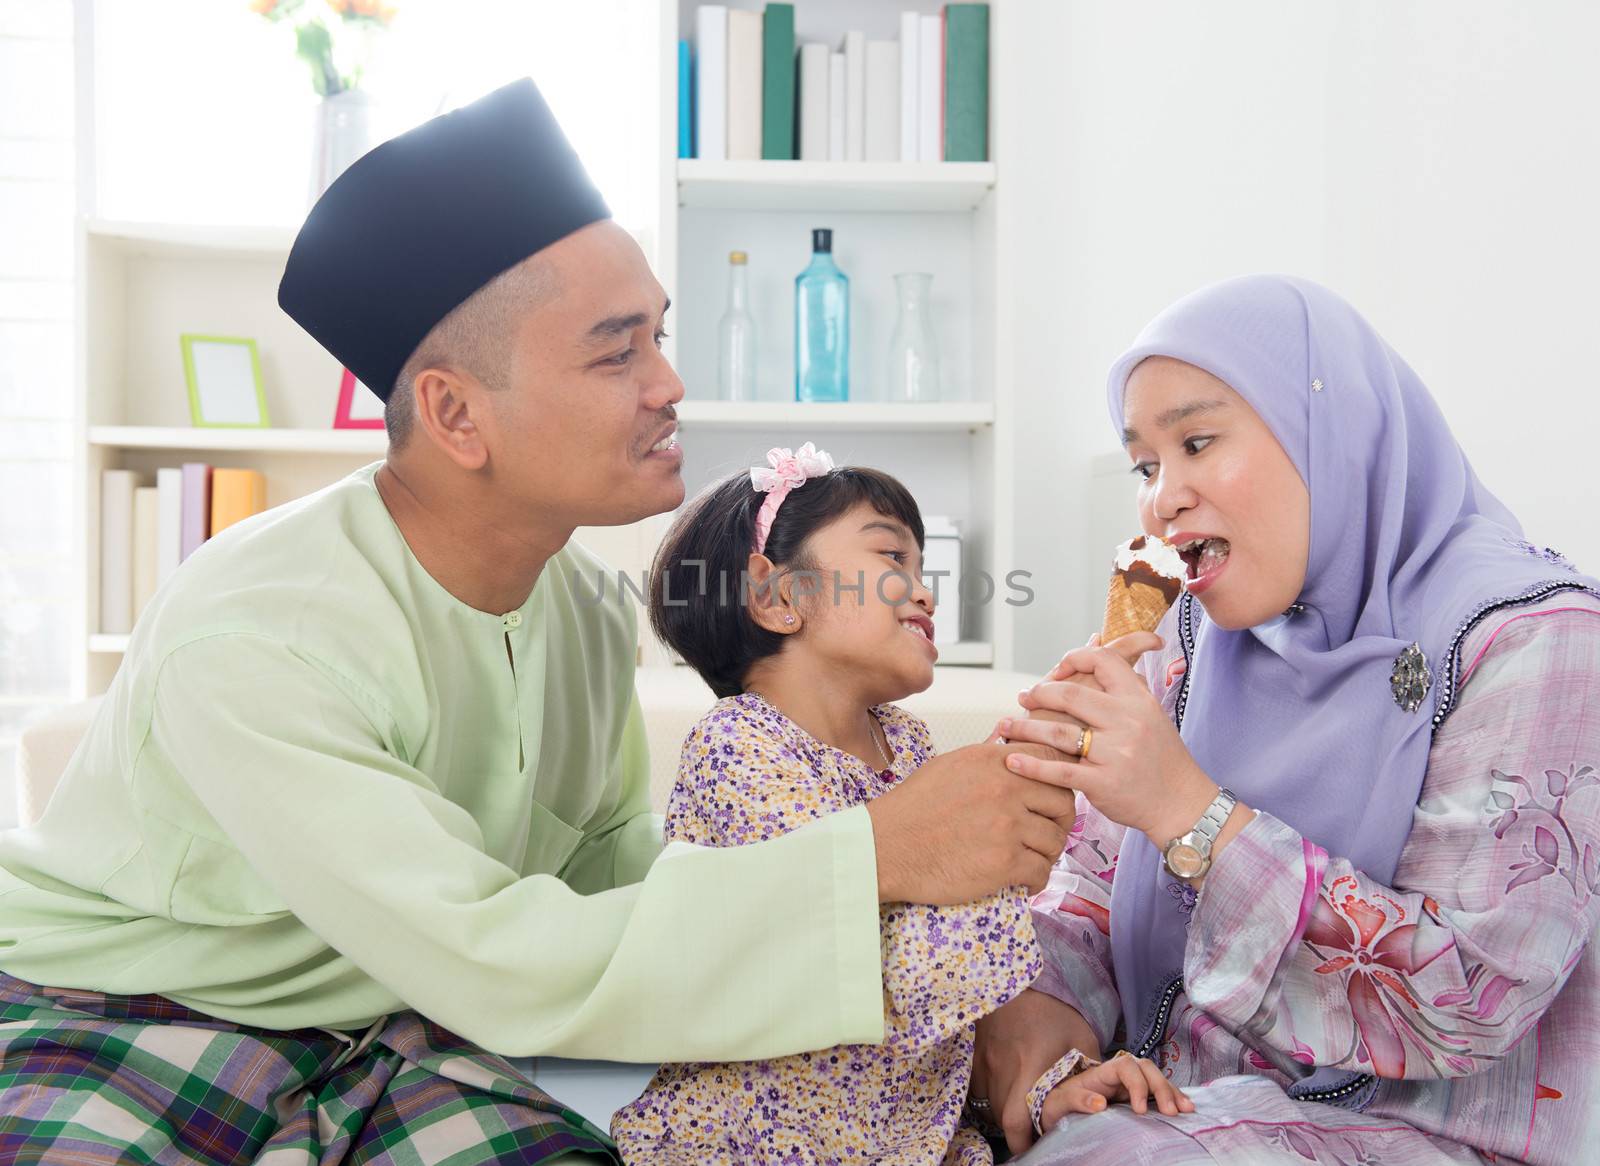 Feeding ice cream. Muslim girl feeding mother an ice cream. Beautiful Southeast Asian family living lifestyle at home.